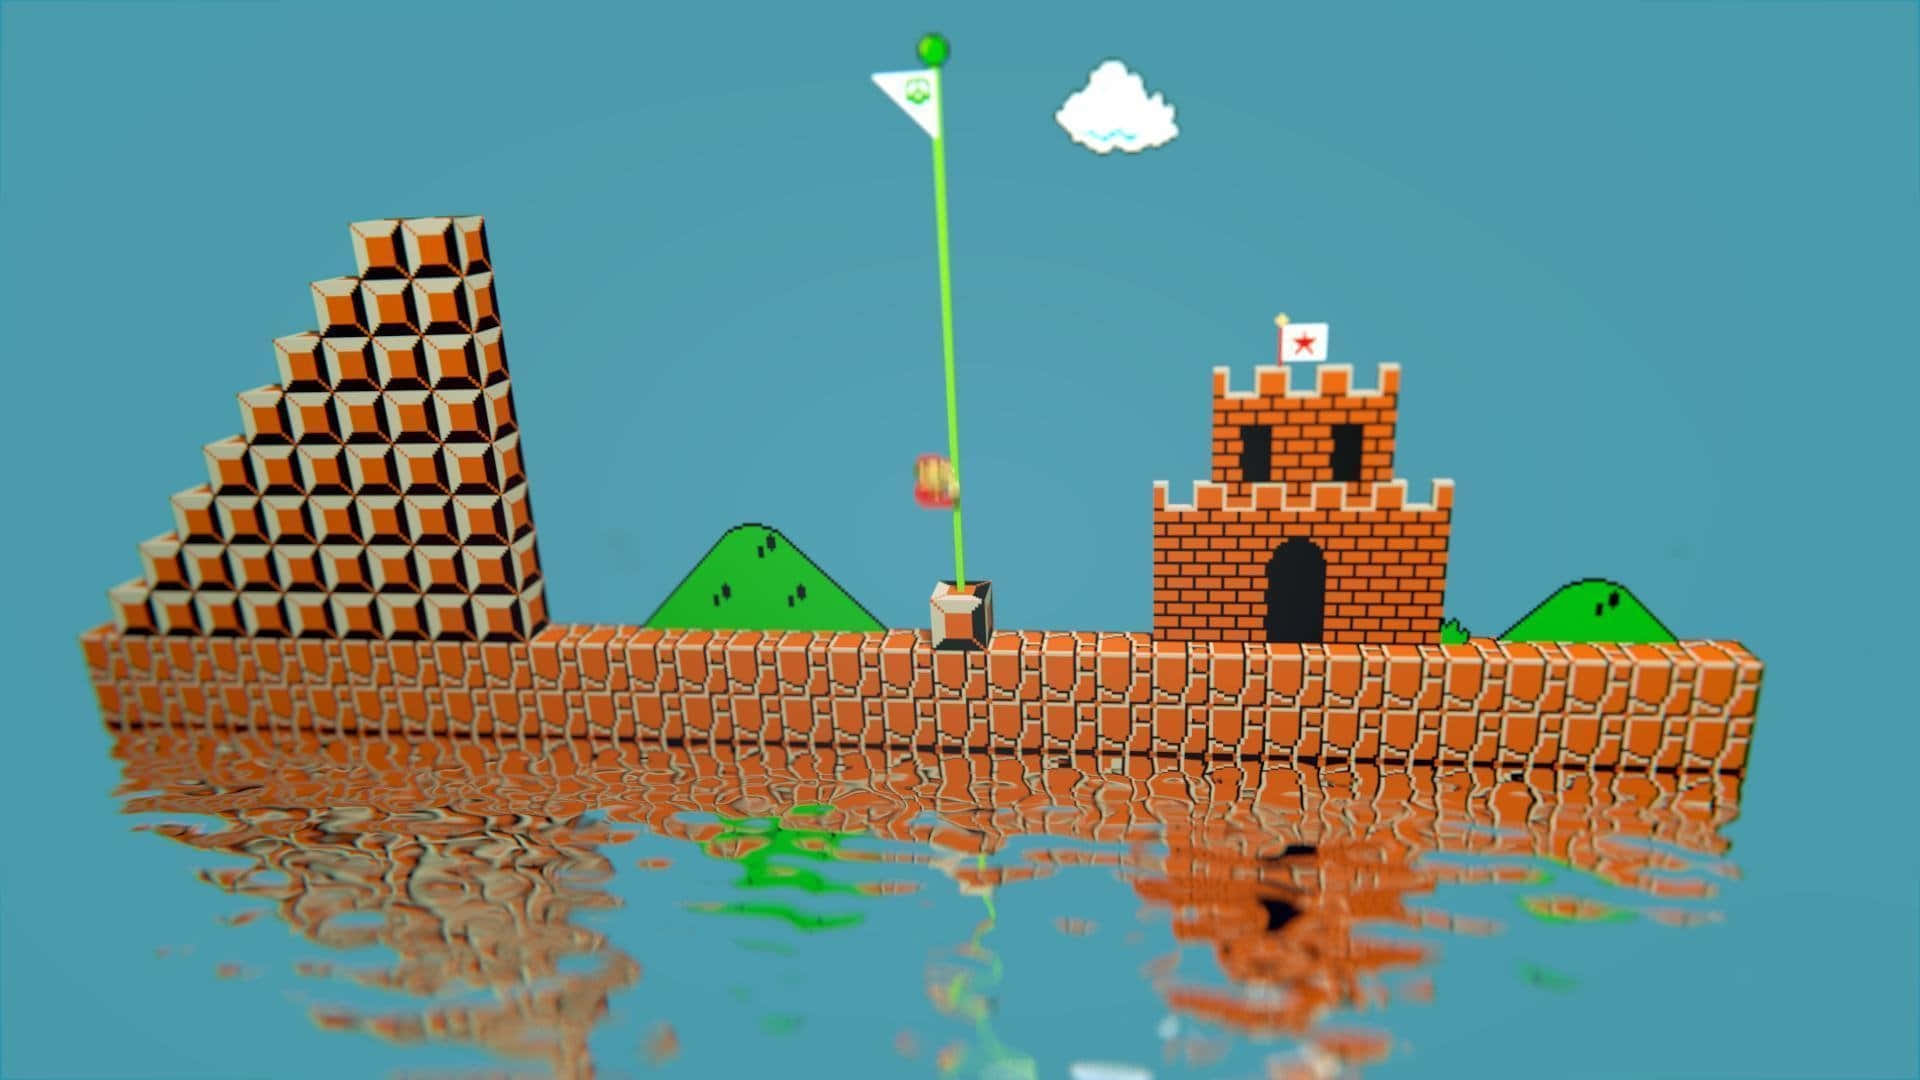 Retro8-bit Mario Saltando Hacia La Aventura. Fondo de pantalla